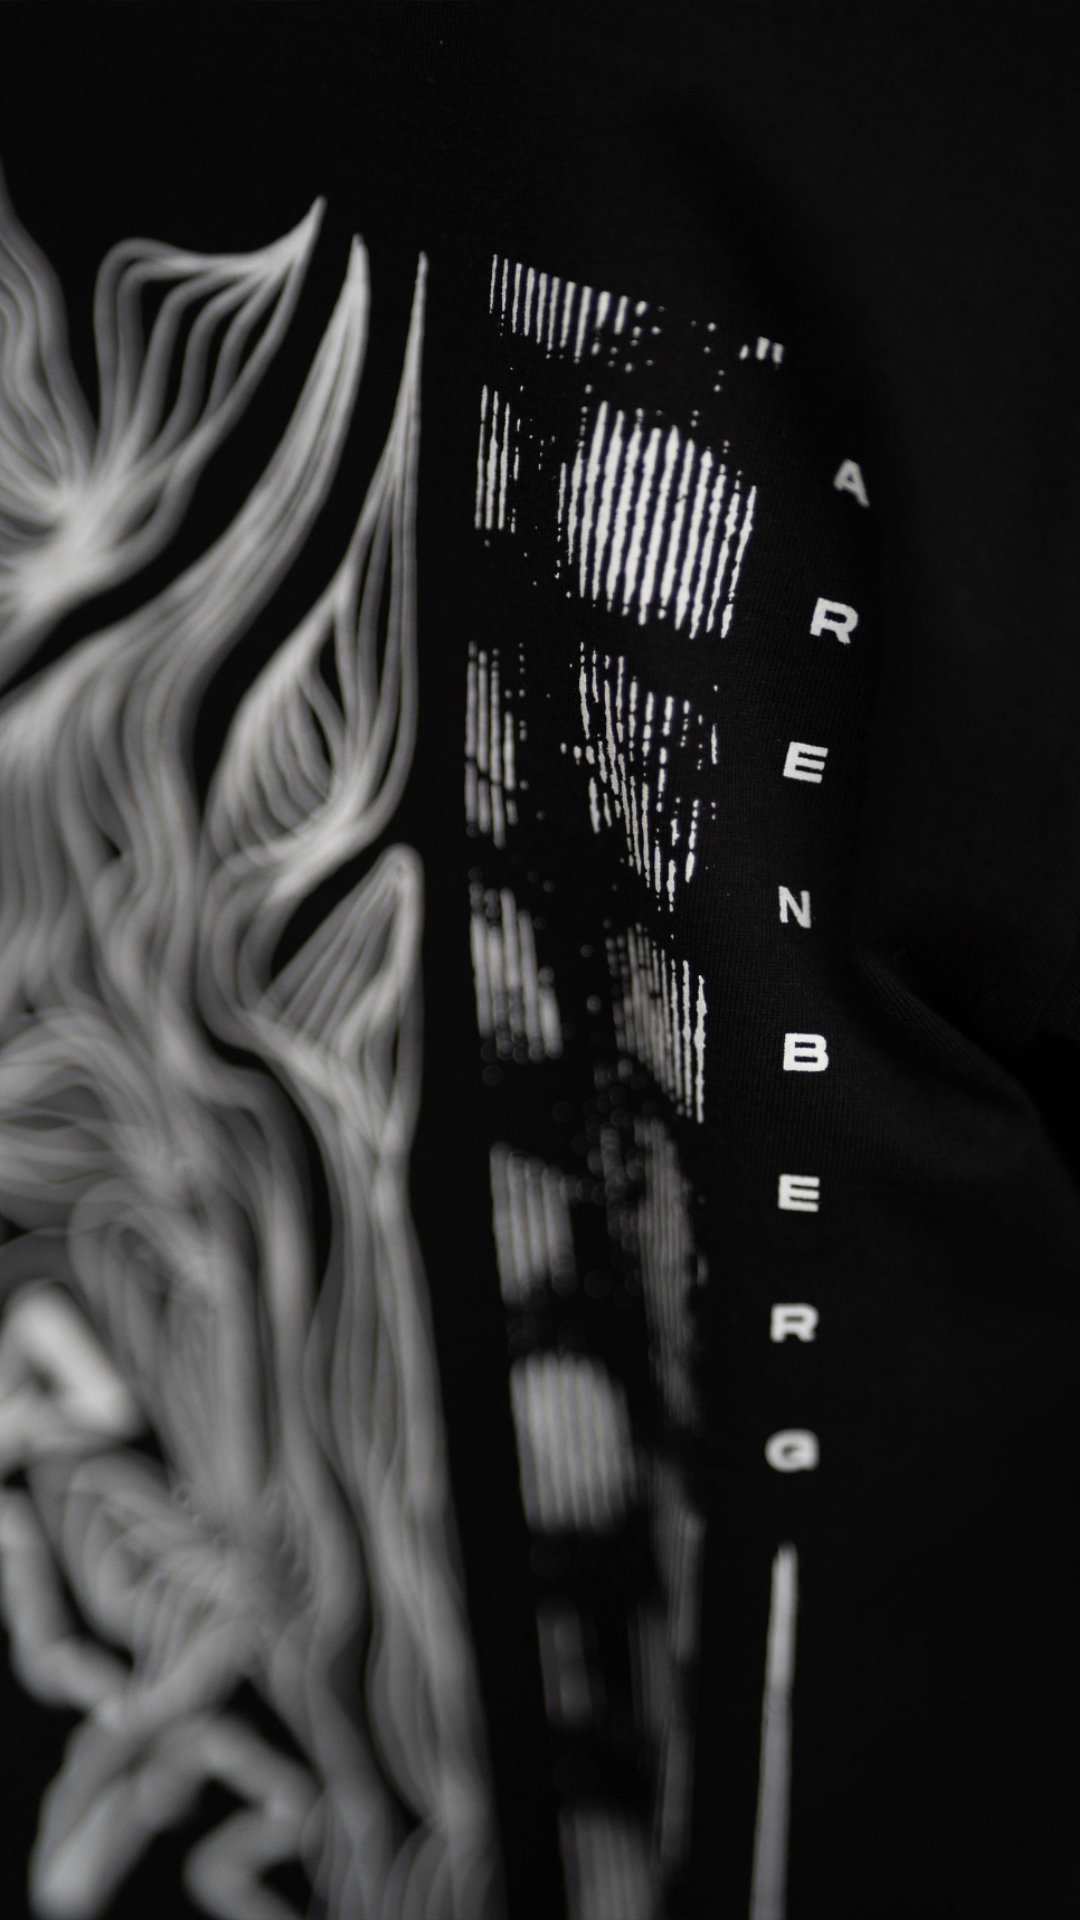 Arenberg-Detail auf T-Shirt